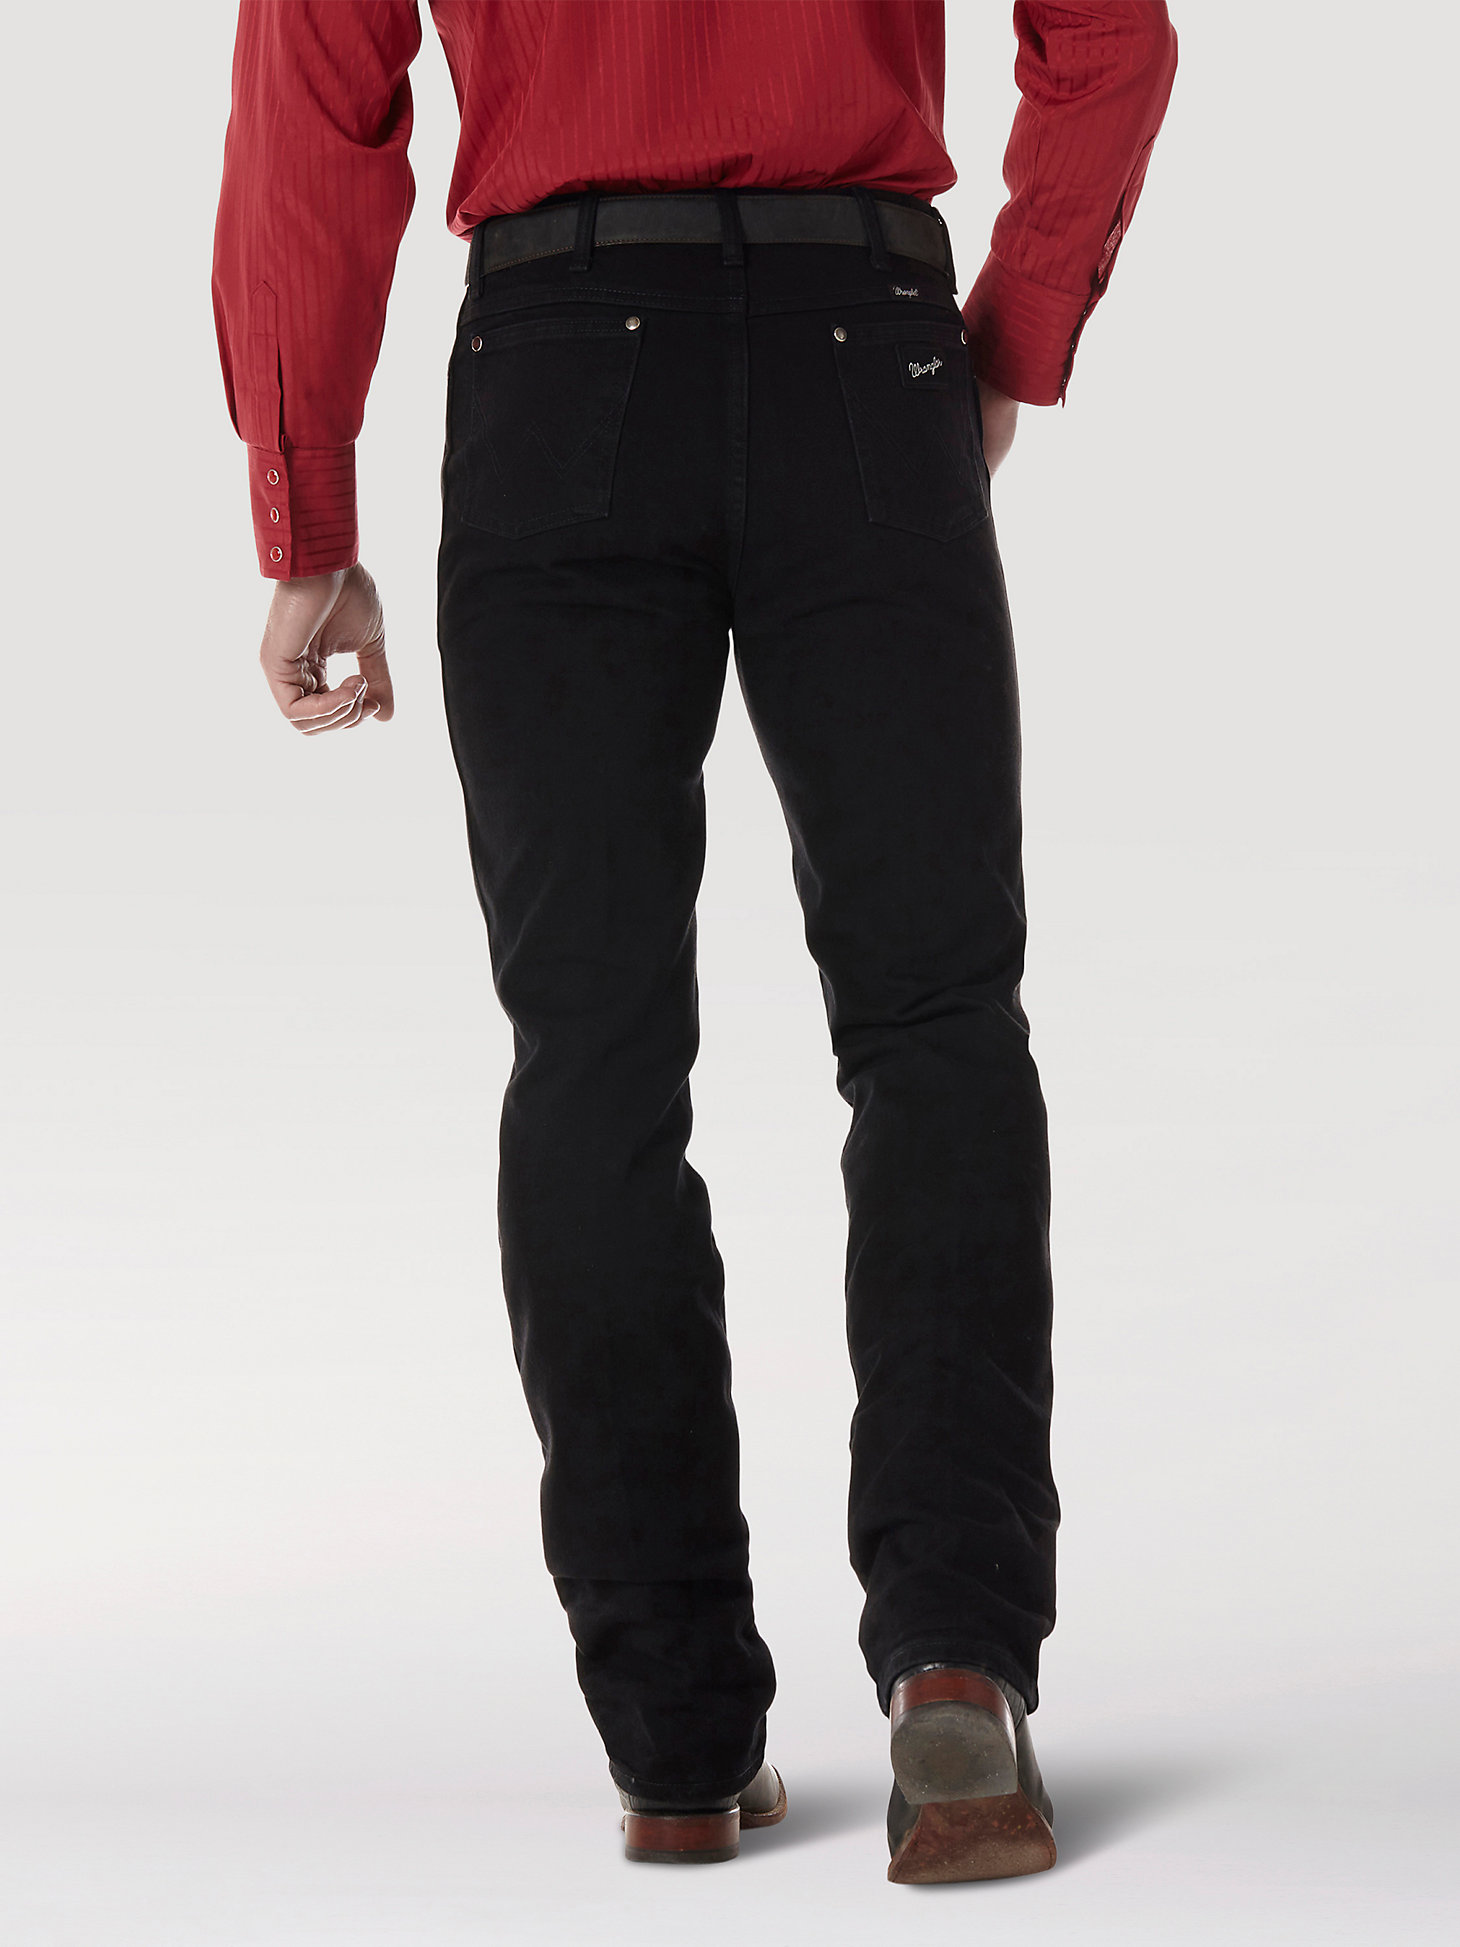 Cowboy Cut® Silver Edition Slim Fit Jean in Black alternative view 2